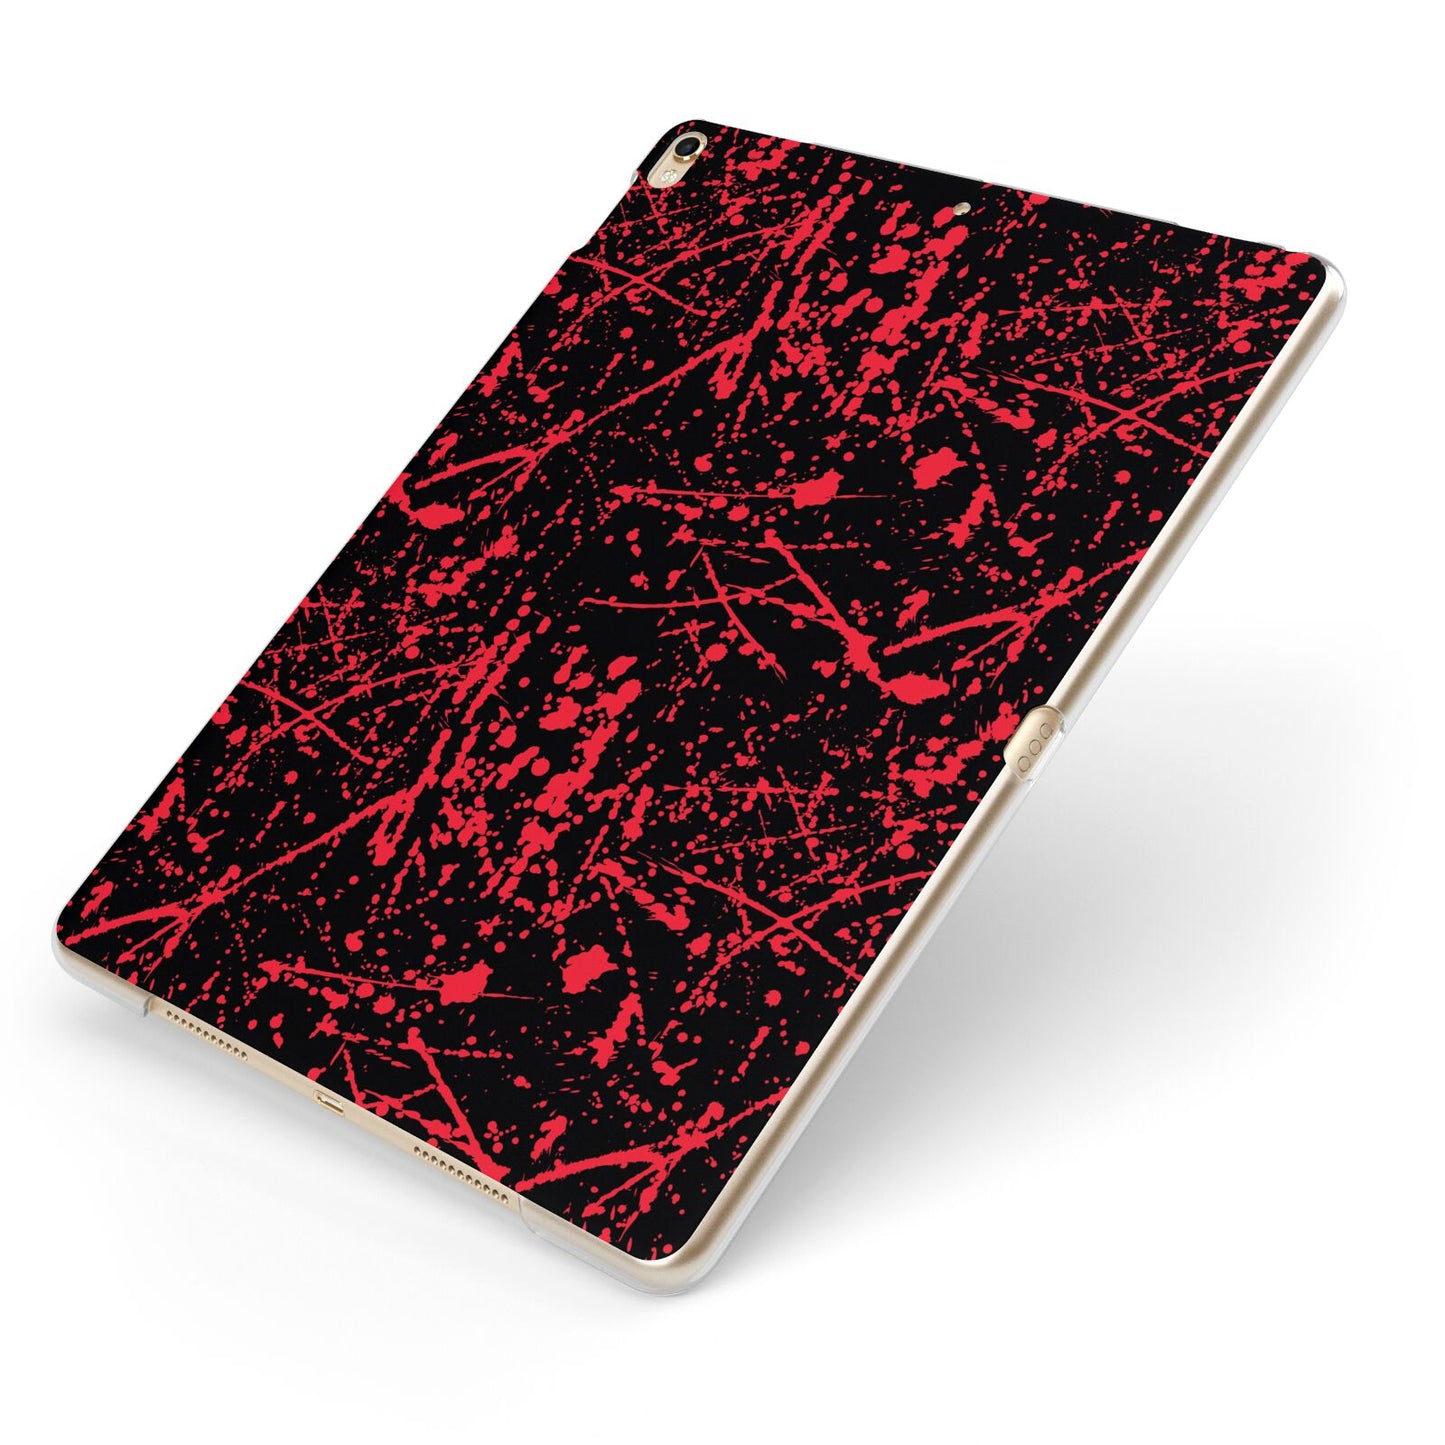 Blood Splatters Apple iPad Case on Gold iPad Side View